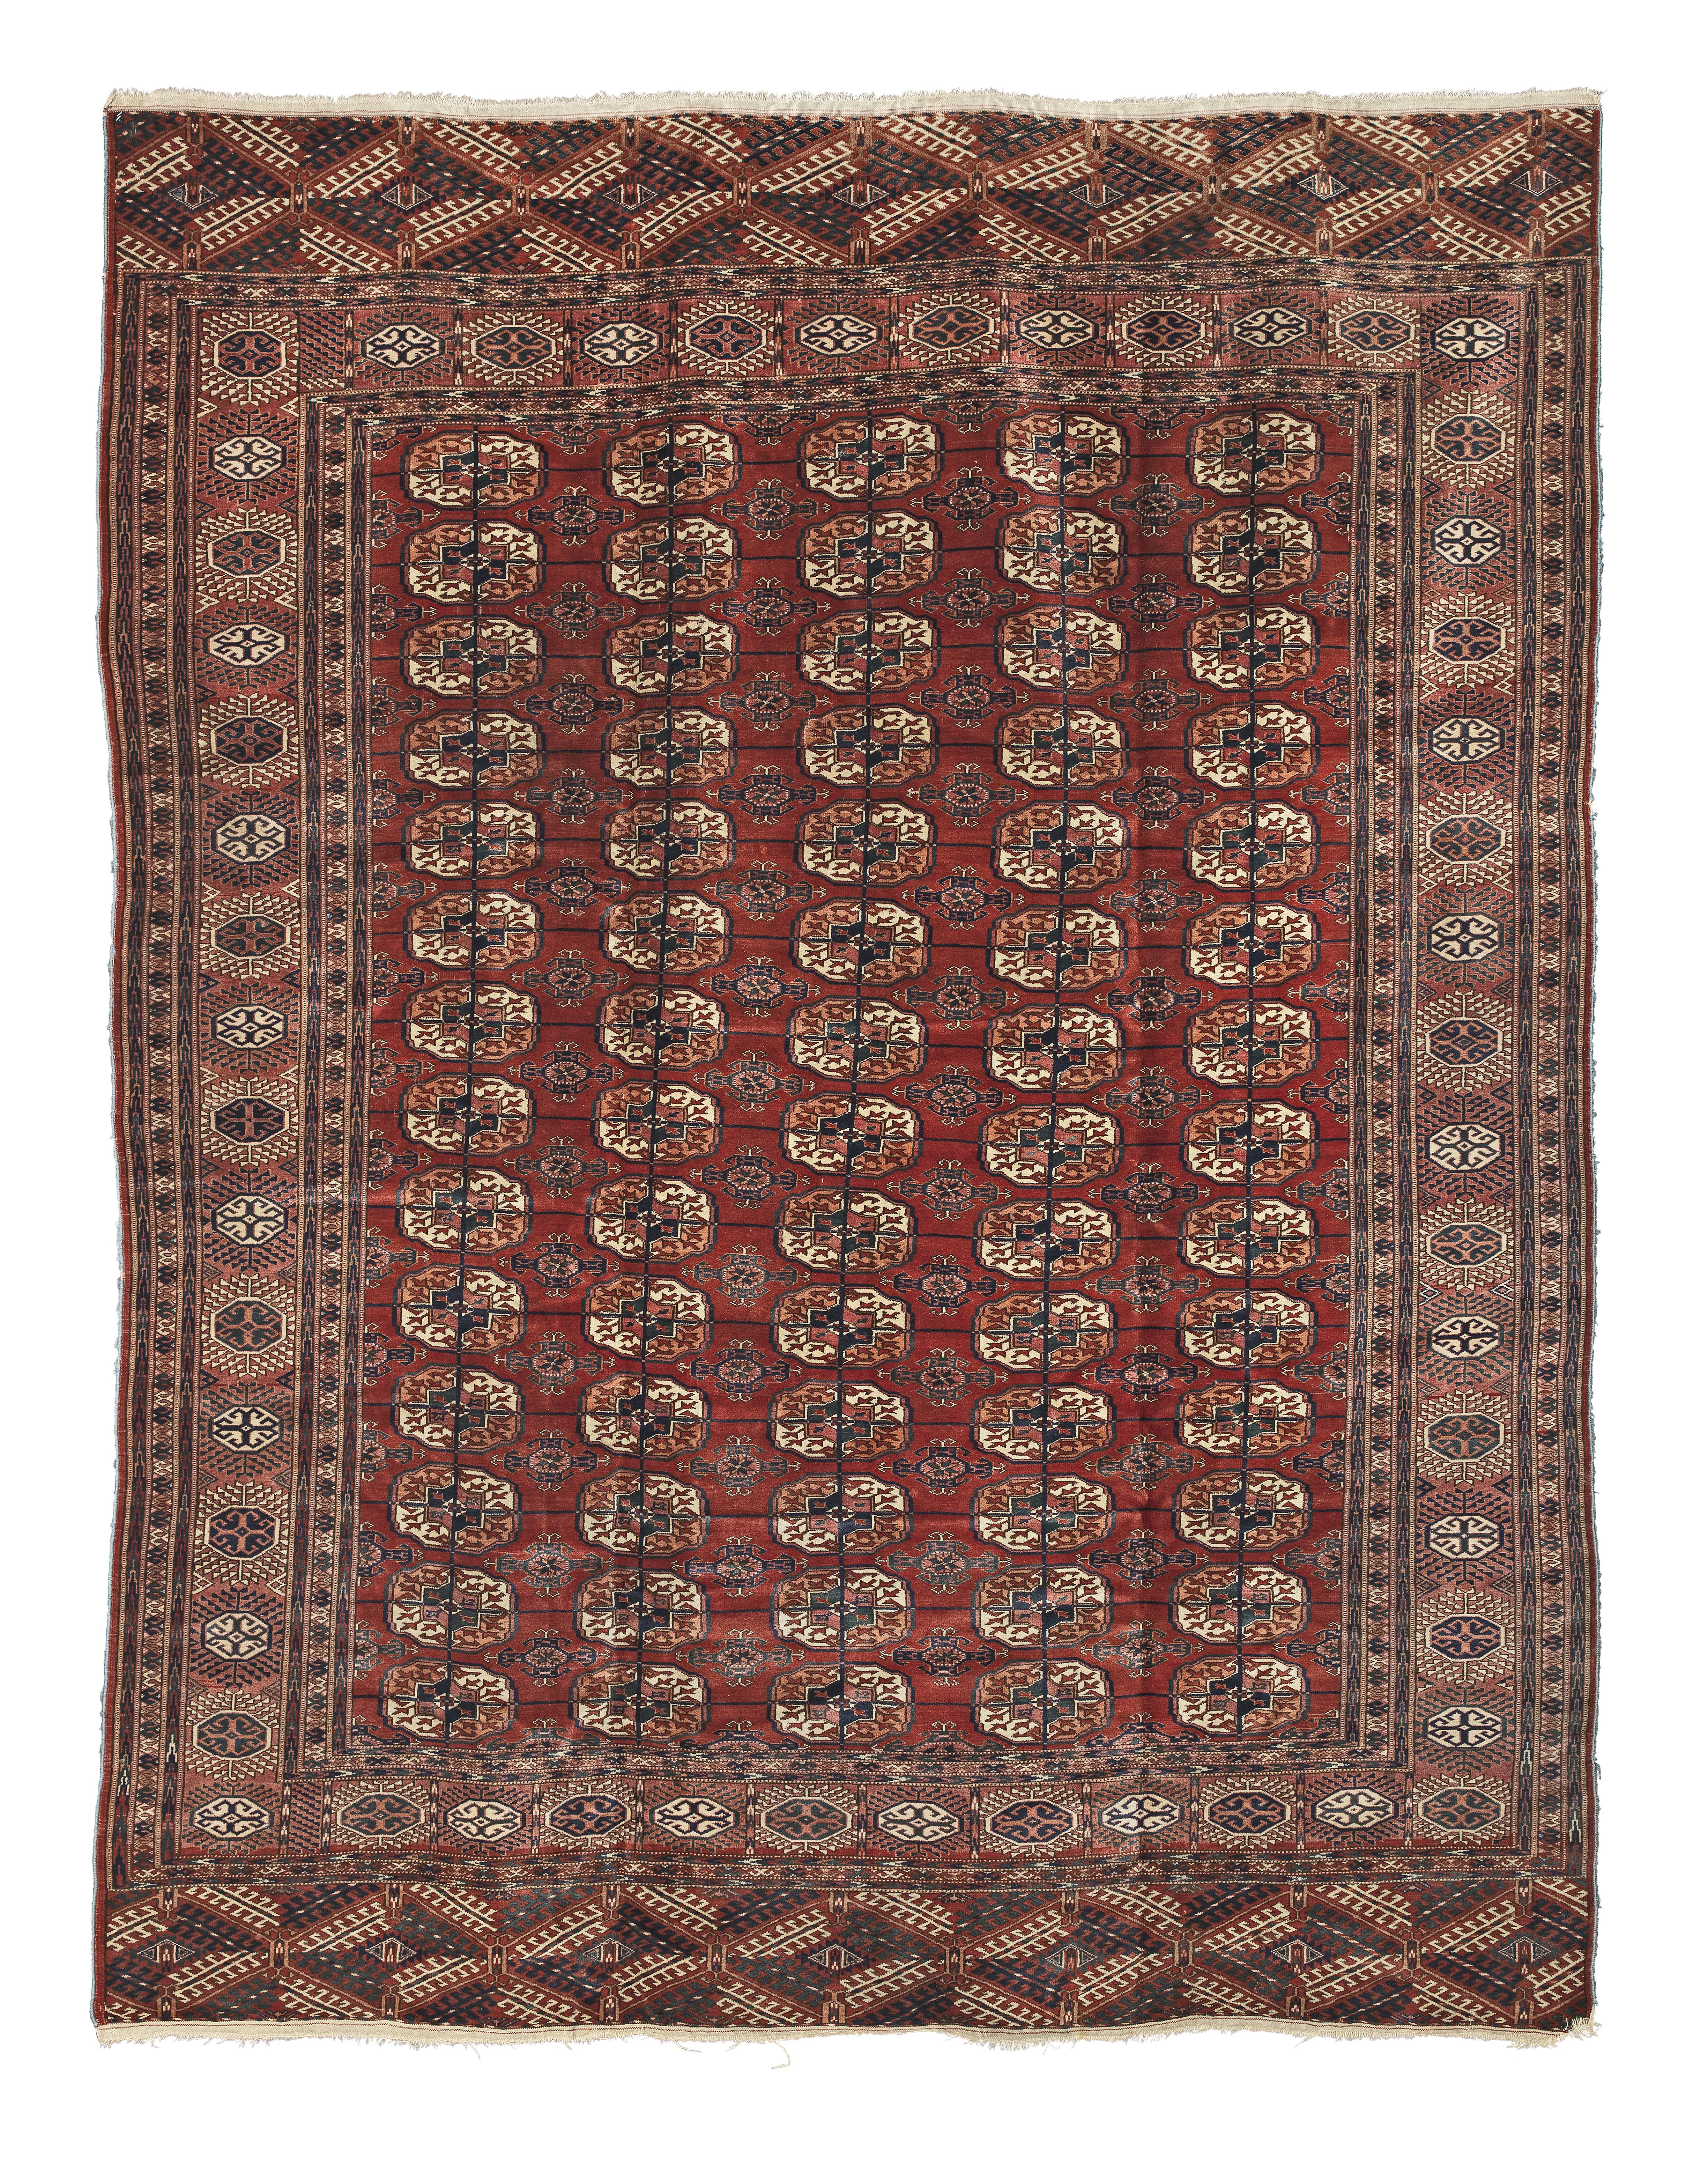 A Turkmen Tekke rug 282cm x 221cm